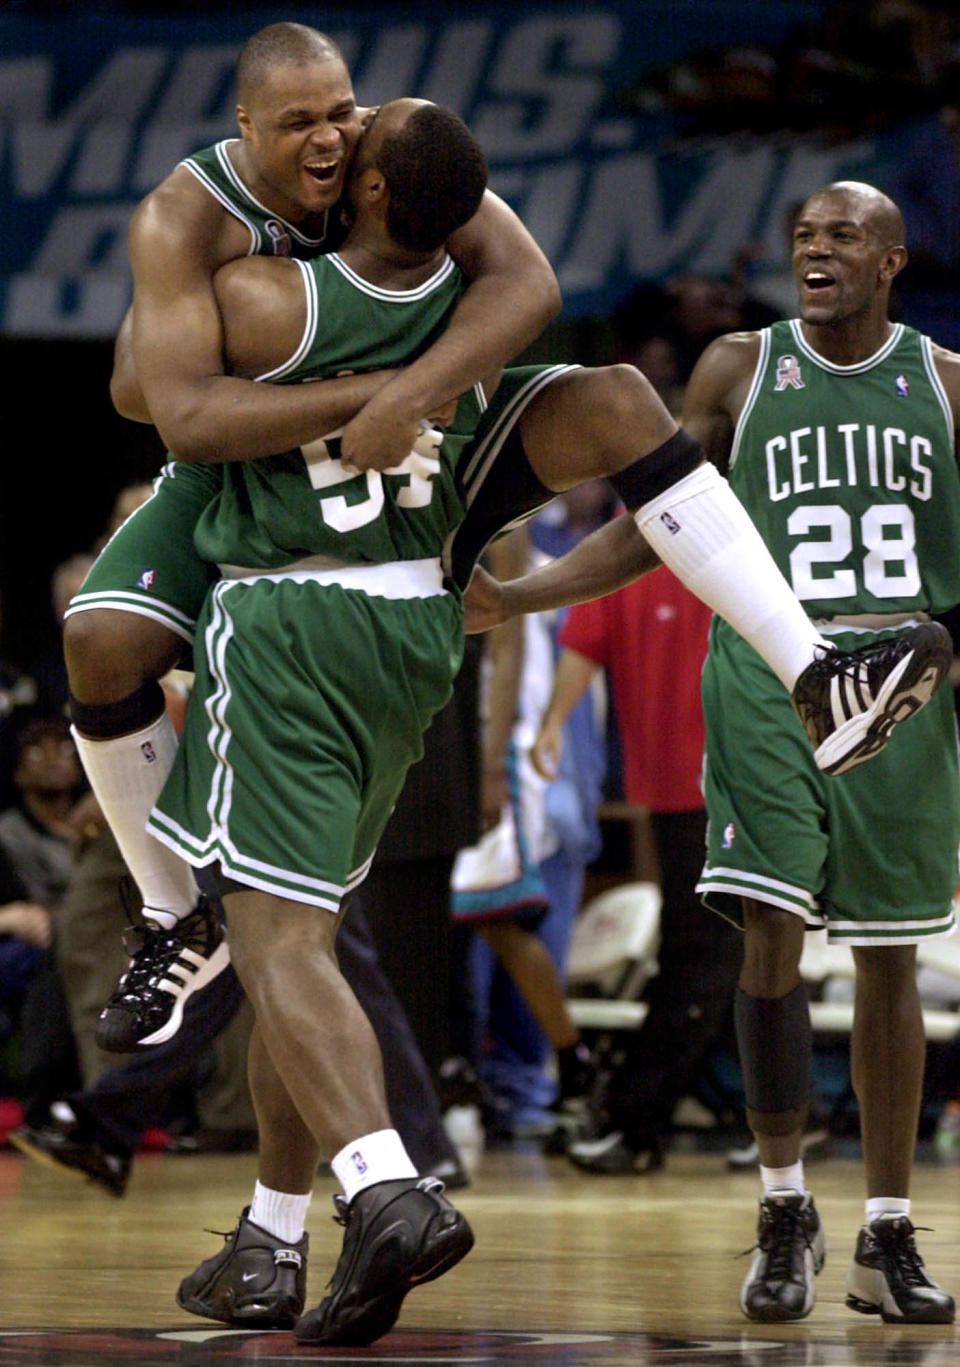 Boston Celtics forward Antoine Walker celebrates with teammate Rodney Rogers (54) as Celtics’ Tony Delk (28) looks on after Walker scored from beyond half court at the buzzer against the <a class="link " href="https://sports.yahoo.com/nba/teams/memphis/" data-i13n="sec:content-canvas;subsec:anchor_text;elm:context_link" data-ylk="slk:Memphis Grizzlies;sec:content-canvas;subsec:anchor_text;elm:context_link;itc:0">Memphis Grizzlies</a> on Friday, March 15, 2002, at the Pyramid in Memphis, Tenn. Boston won 103-97. (AP Photo/Lance Murphey)